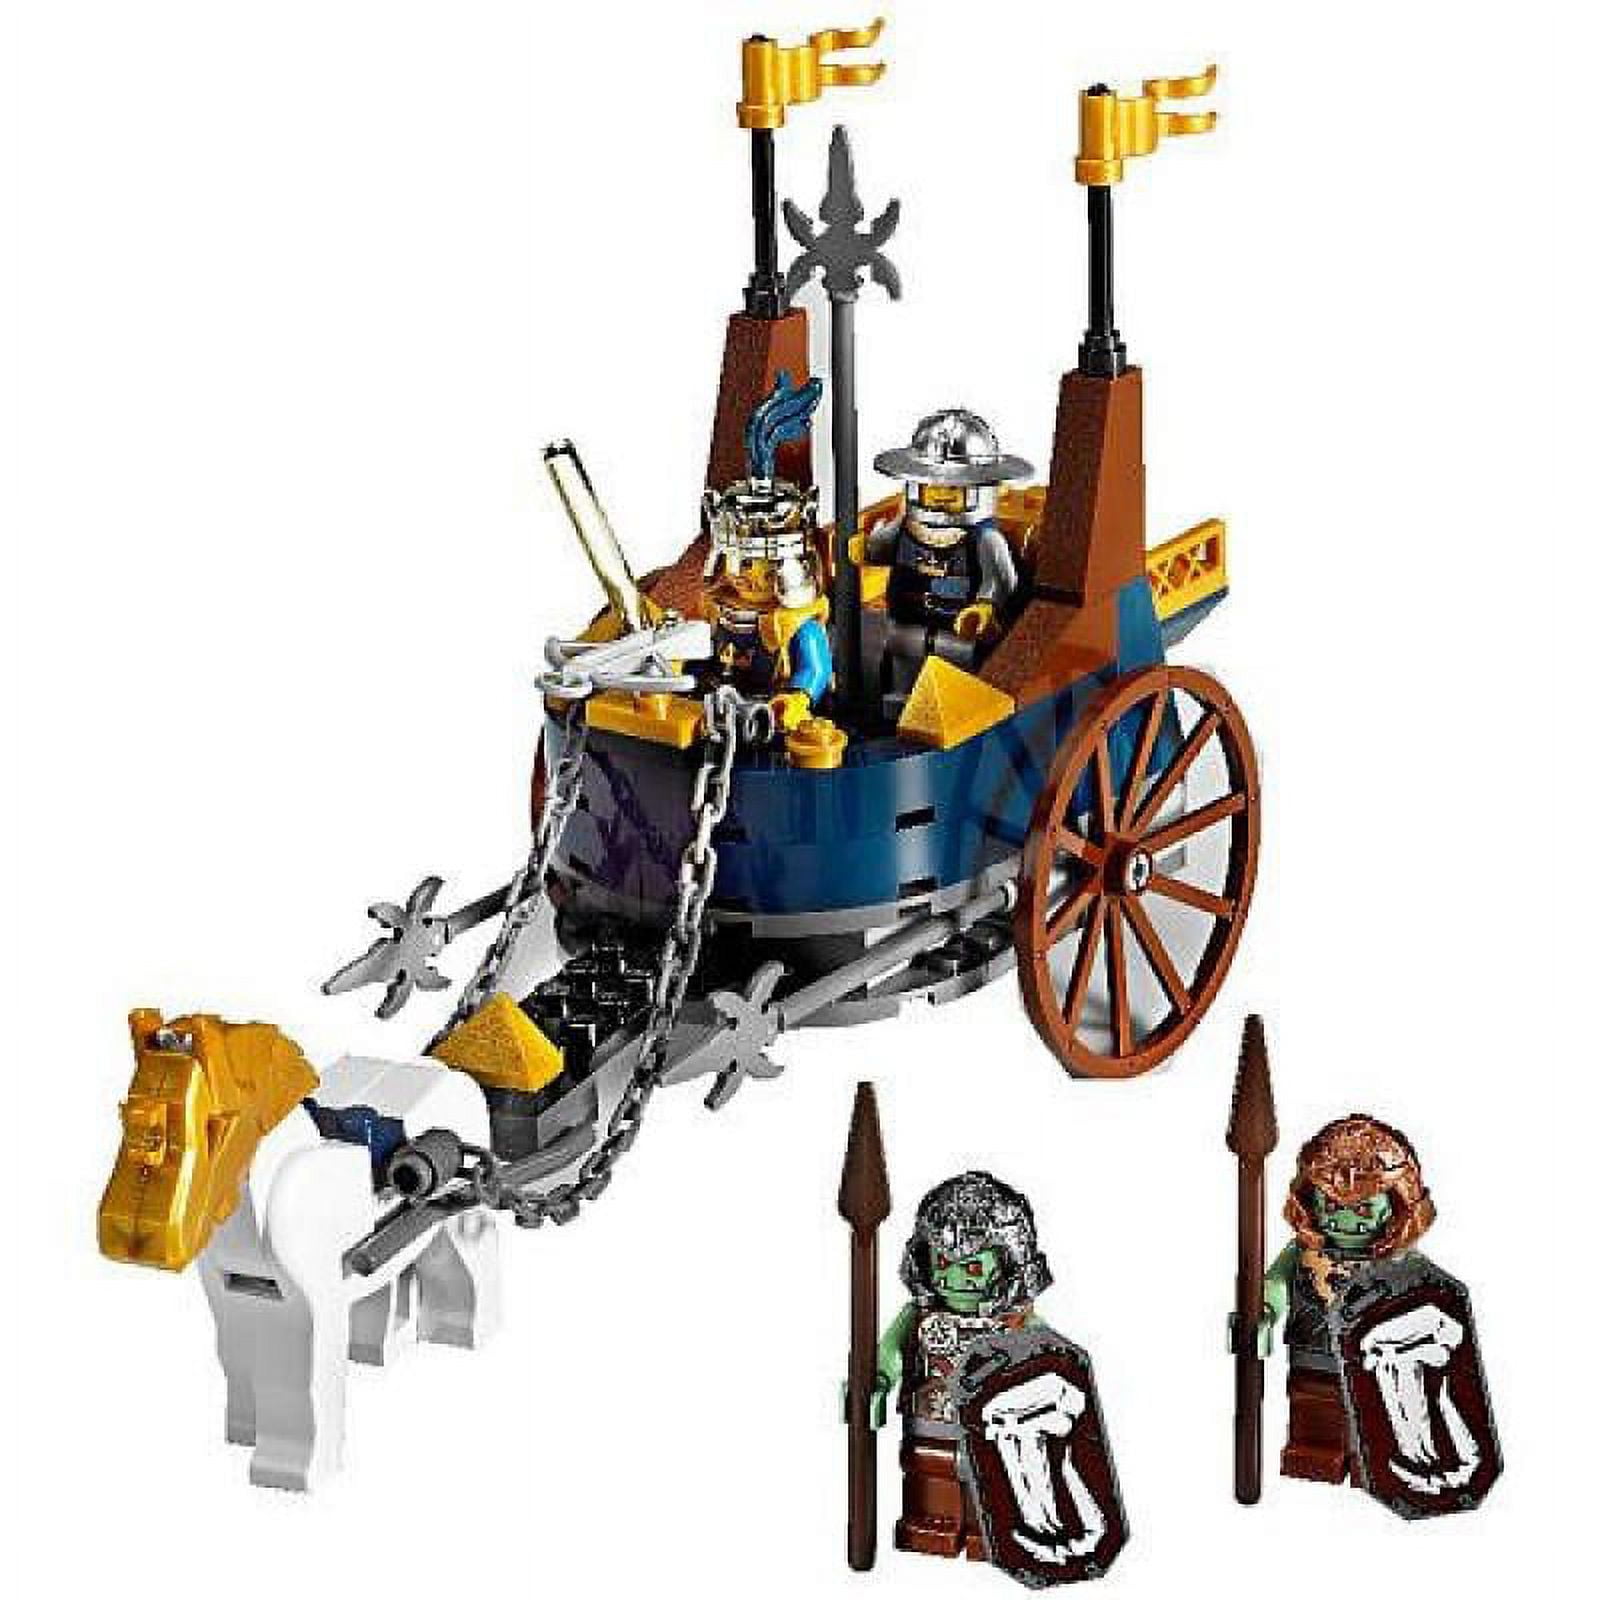 LEGO Castle Le char royal - 7078